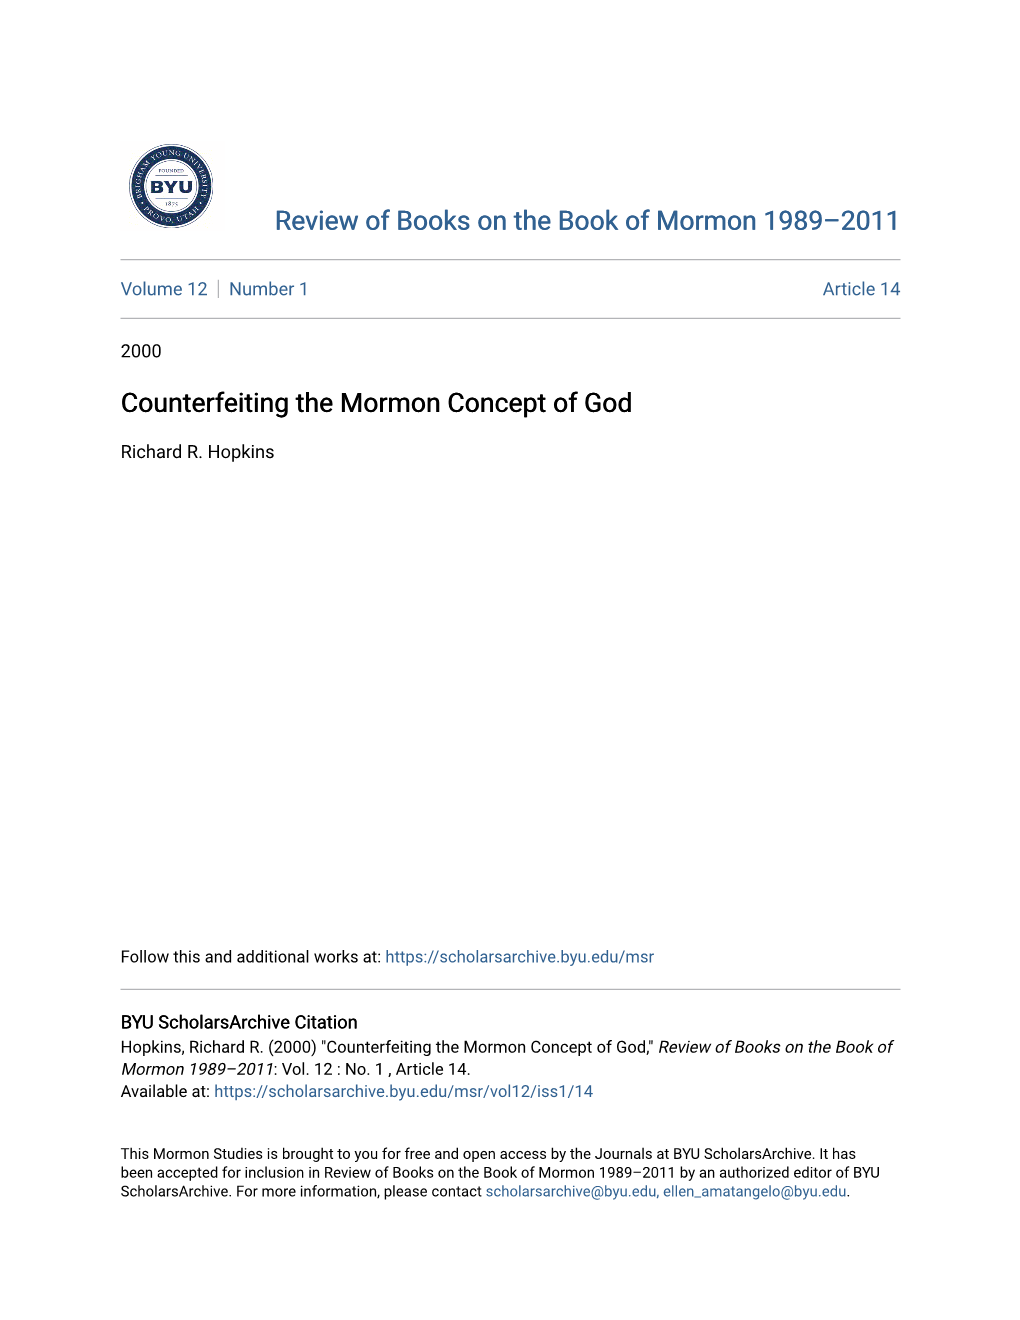 Counterfeiting the Mormon Concept of God